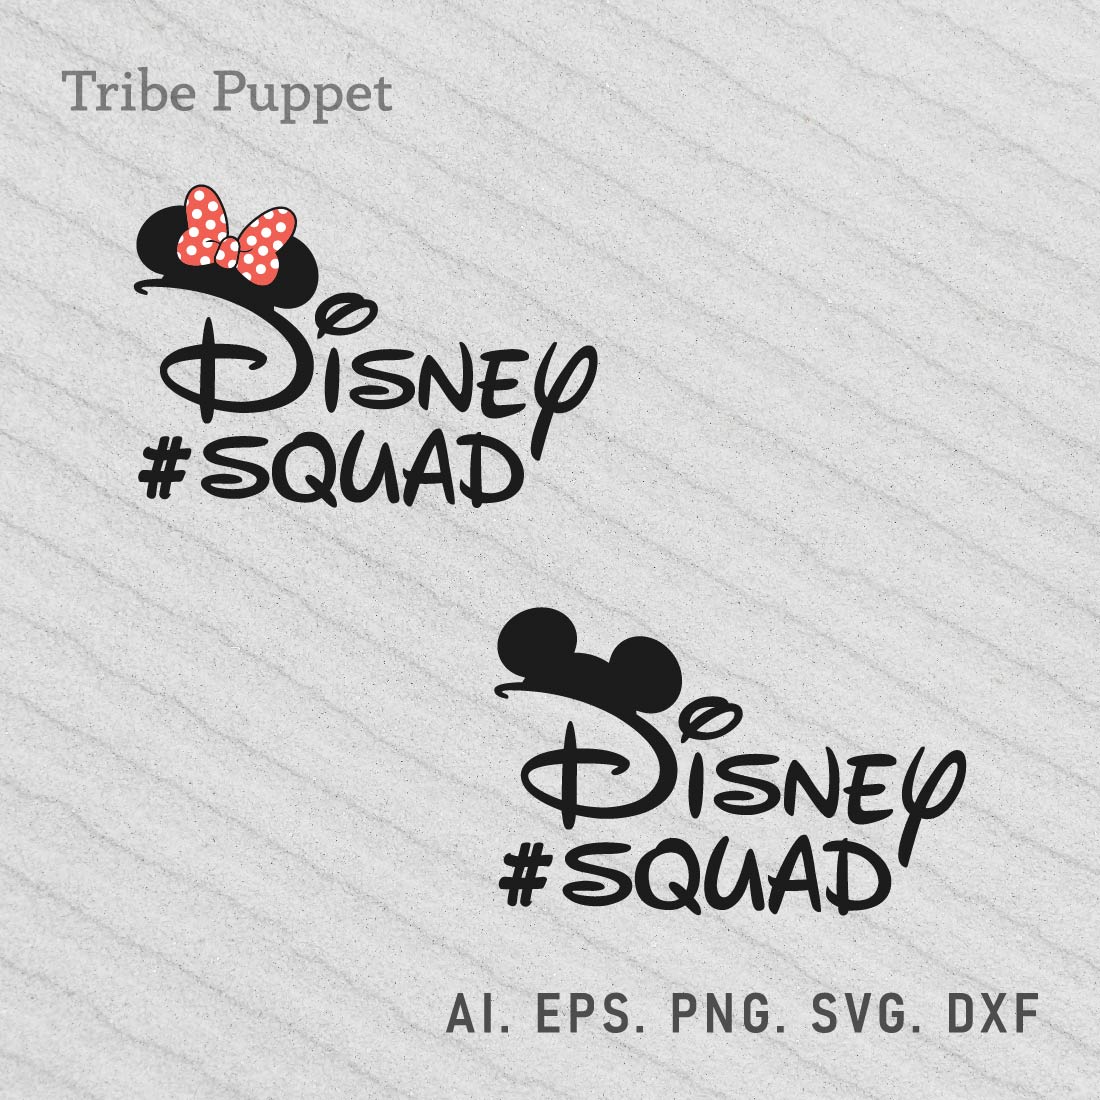 Disney Squad preview image.